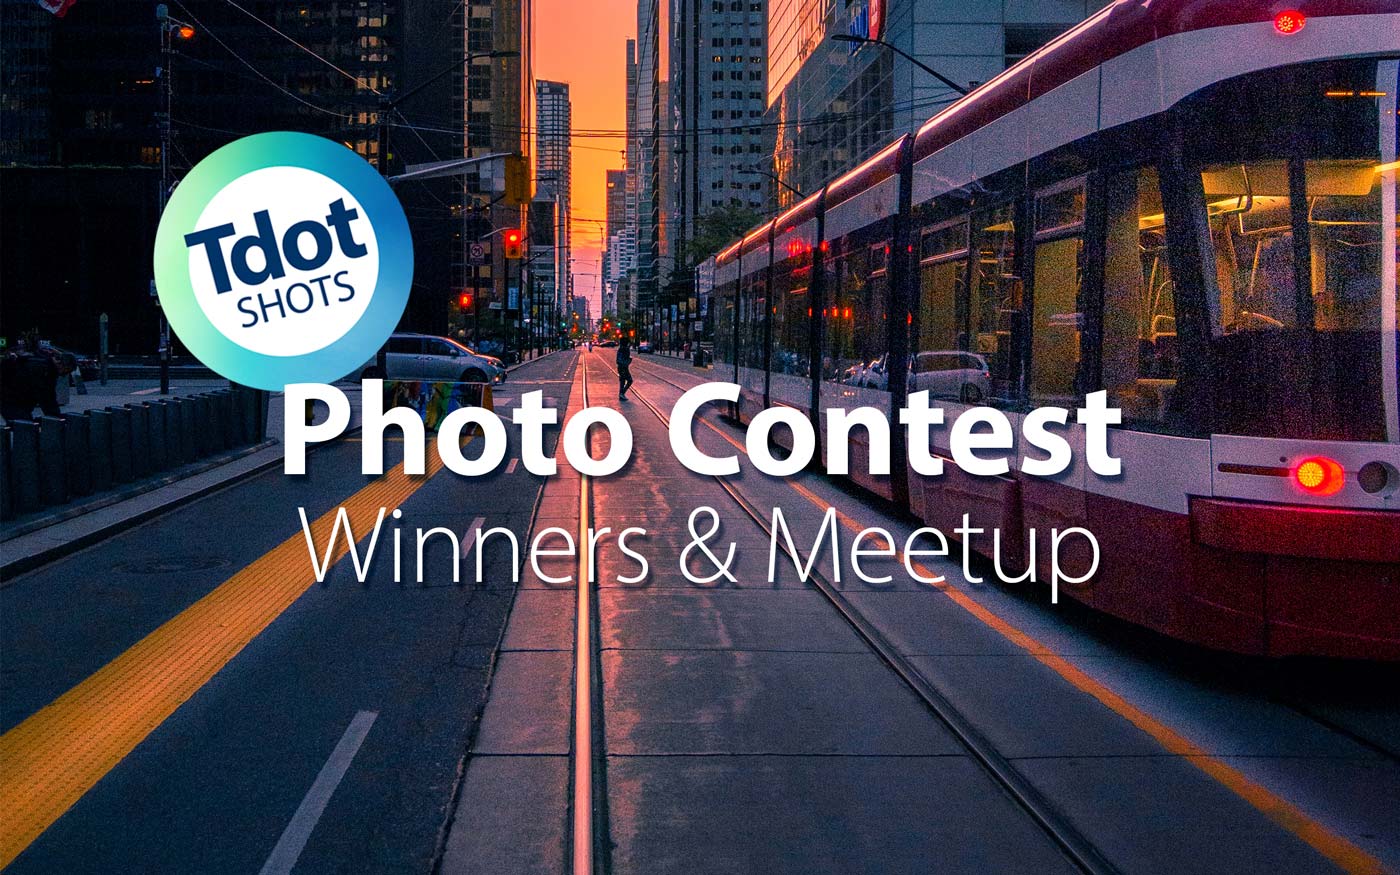 Tdot Shots Photo Contest Awards Wrap-Up (Event Sponsored by Prolab Canada)